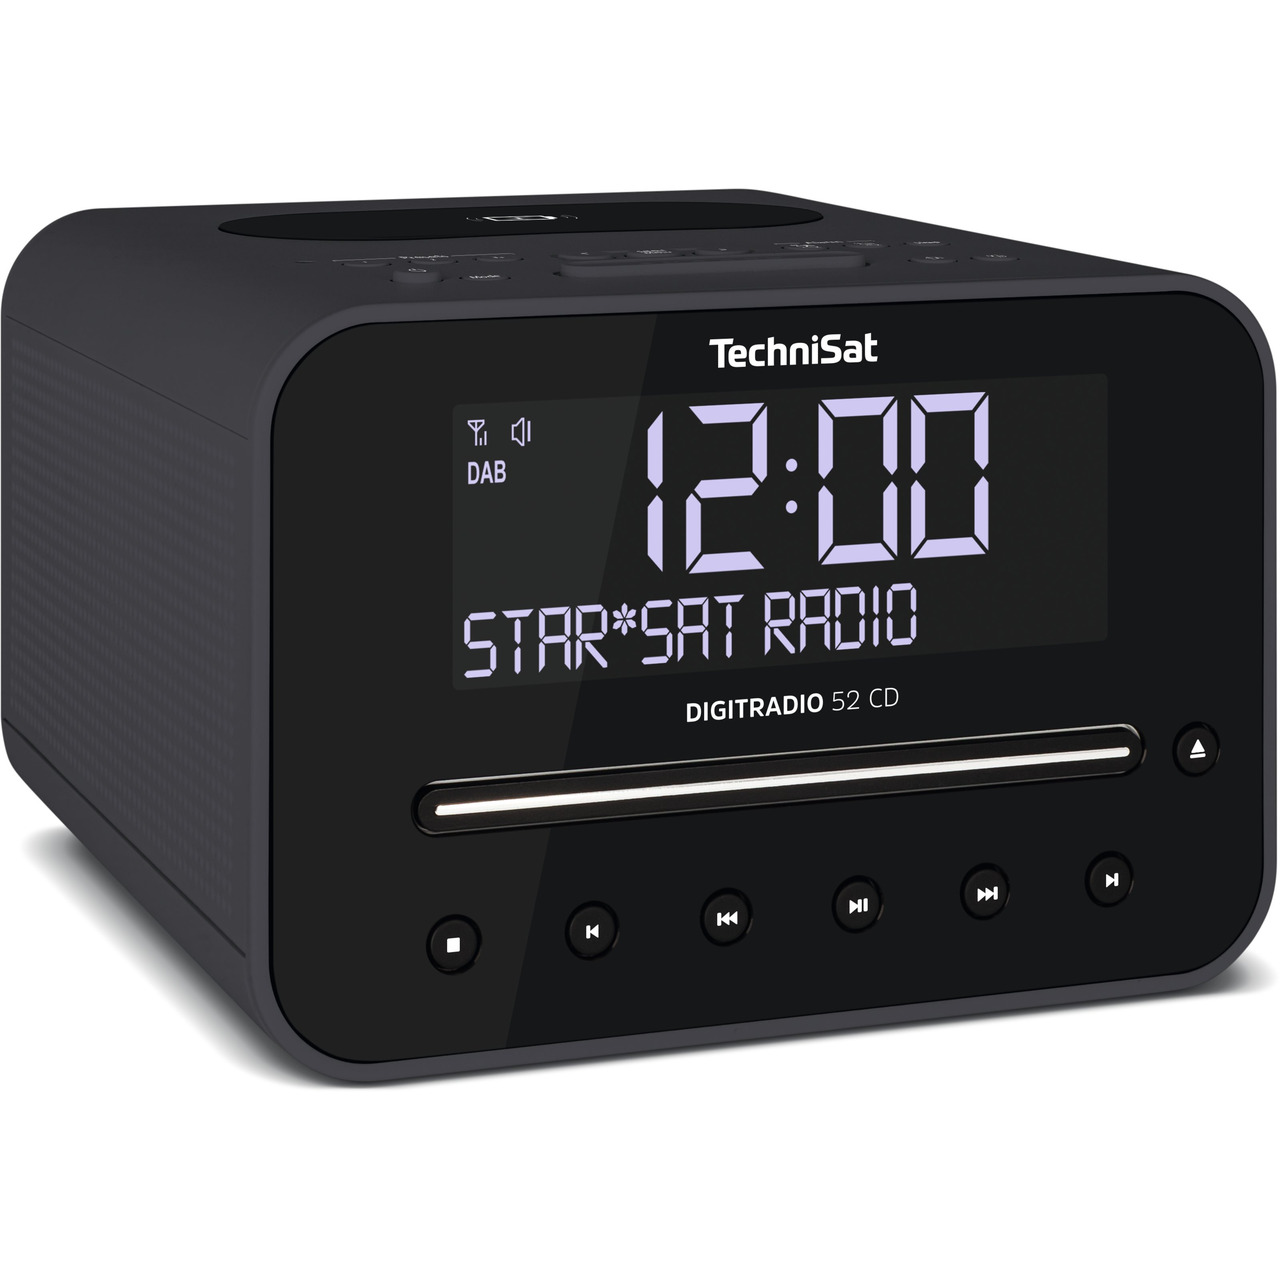 TechniSat Uhrenradio DigitRadio 52 CD- DAB+-UKW-Empfang- CD-Player- Bluetooth-Funktion- schwarz unter Multimedia